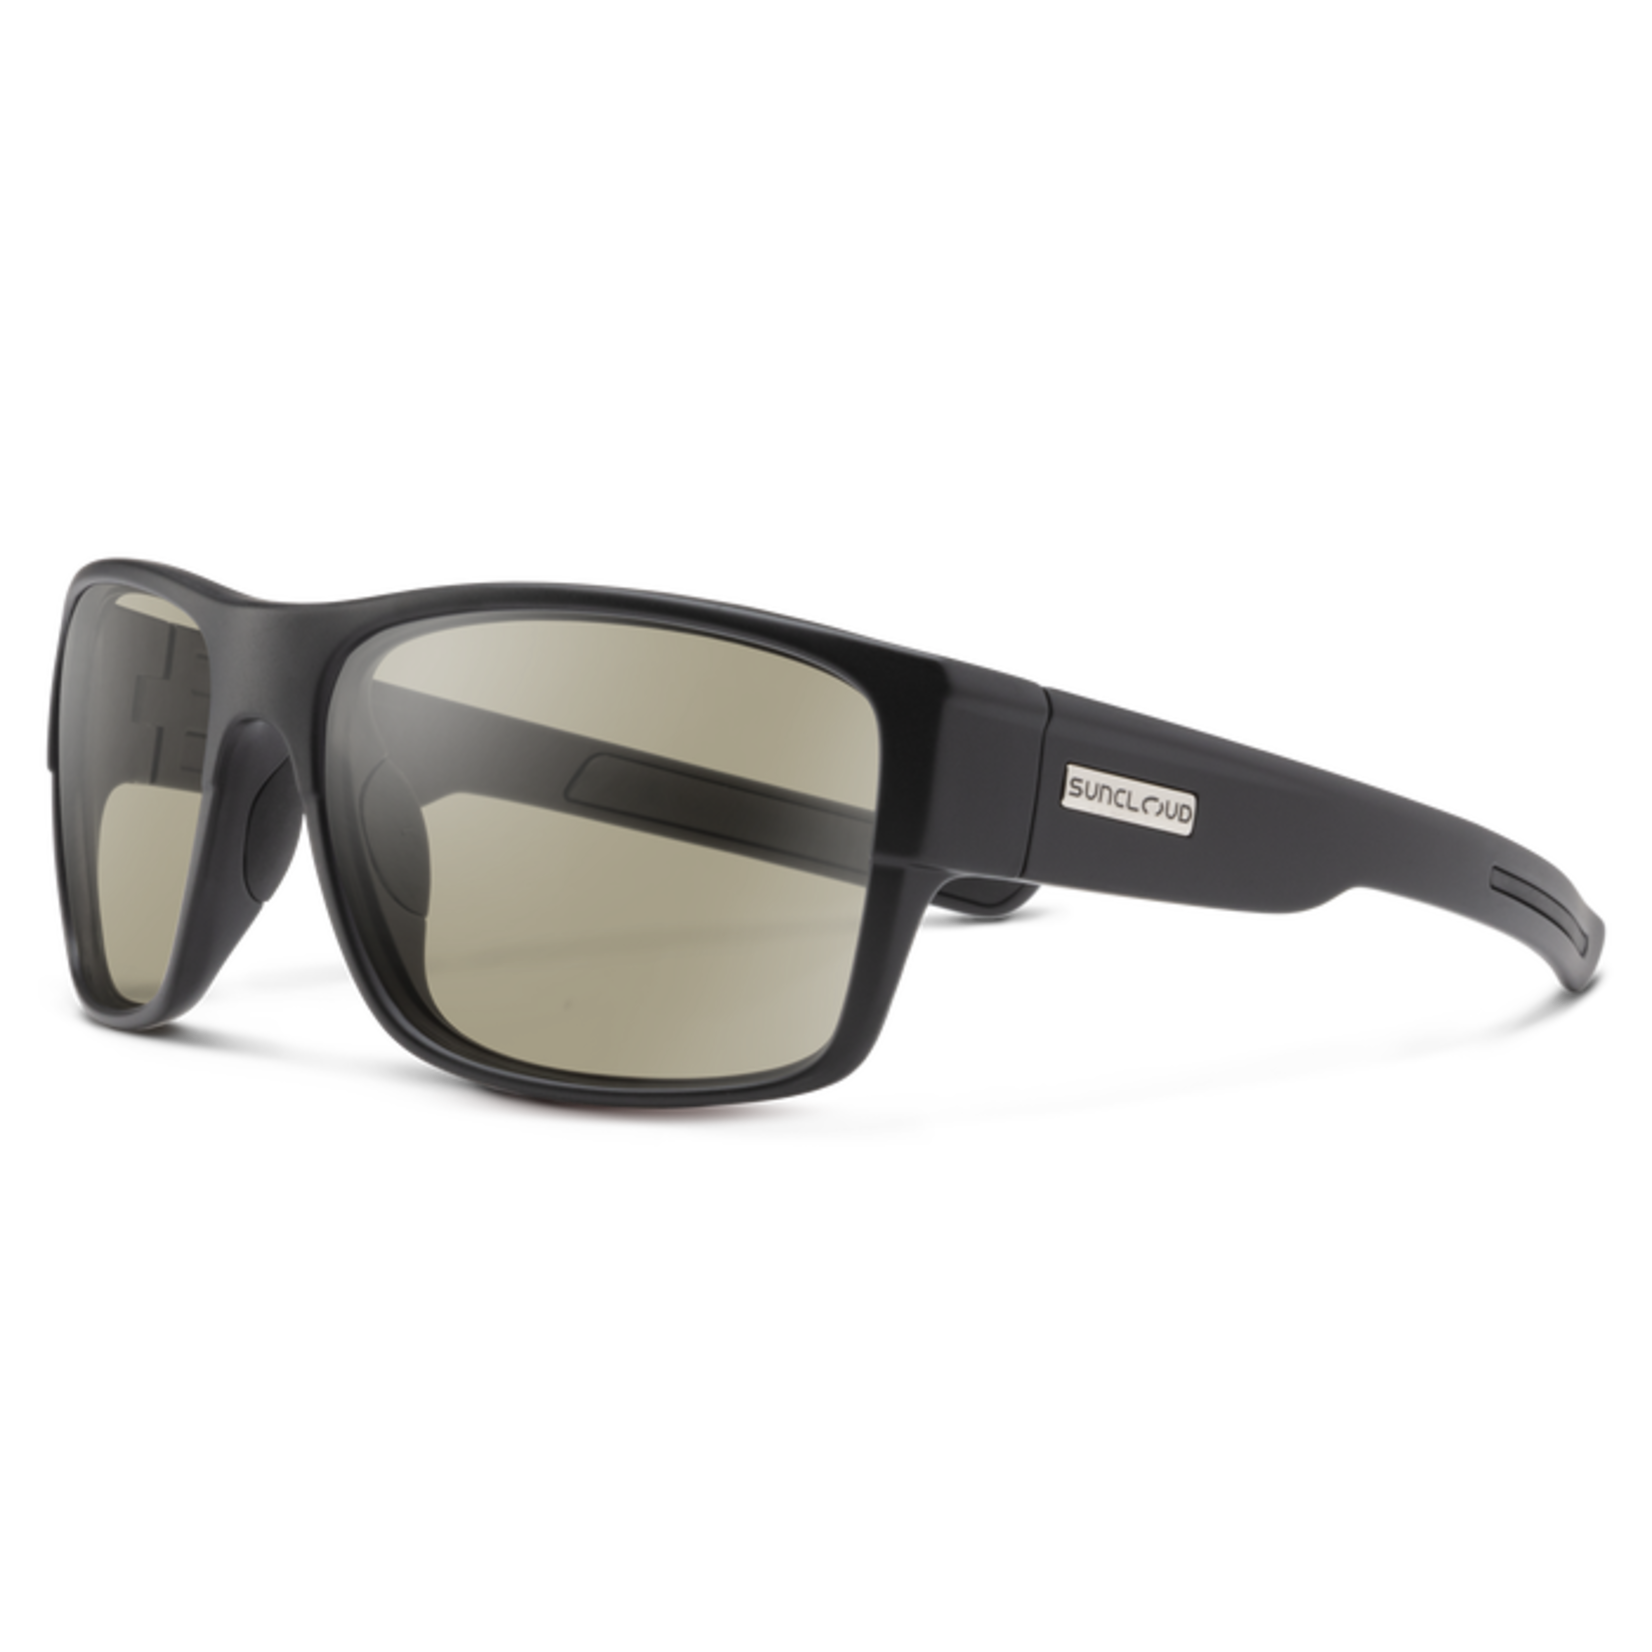 SunCloud SunCloud Range Sunglasses